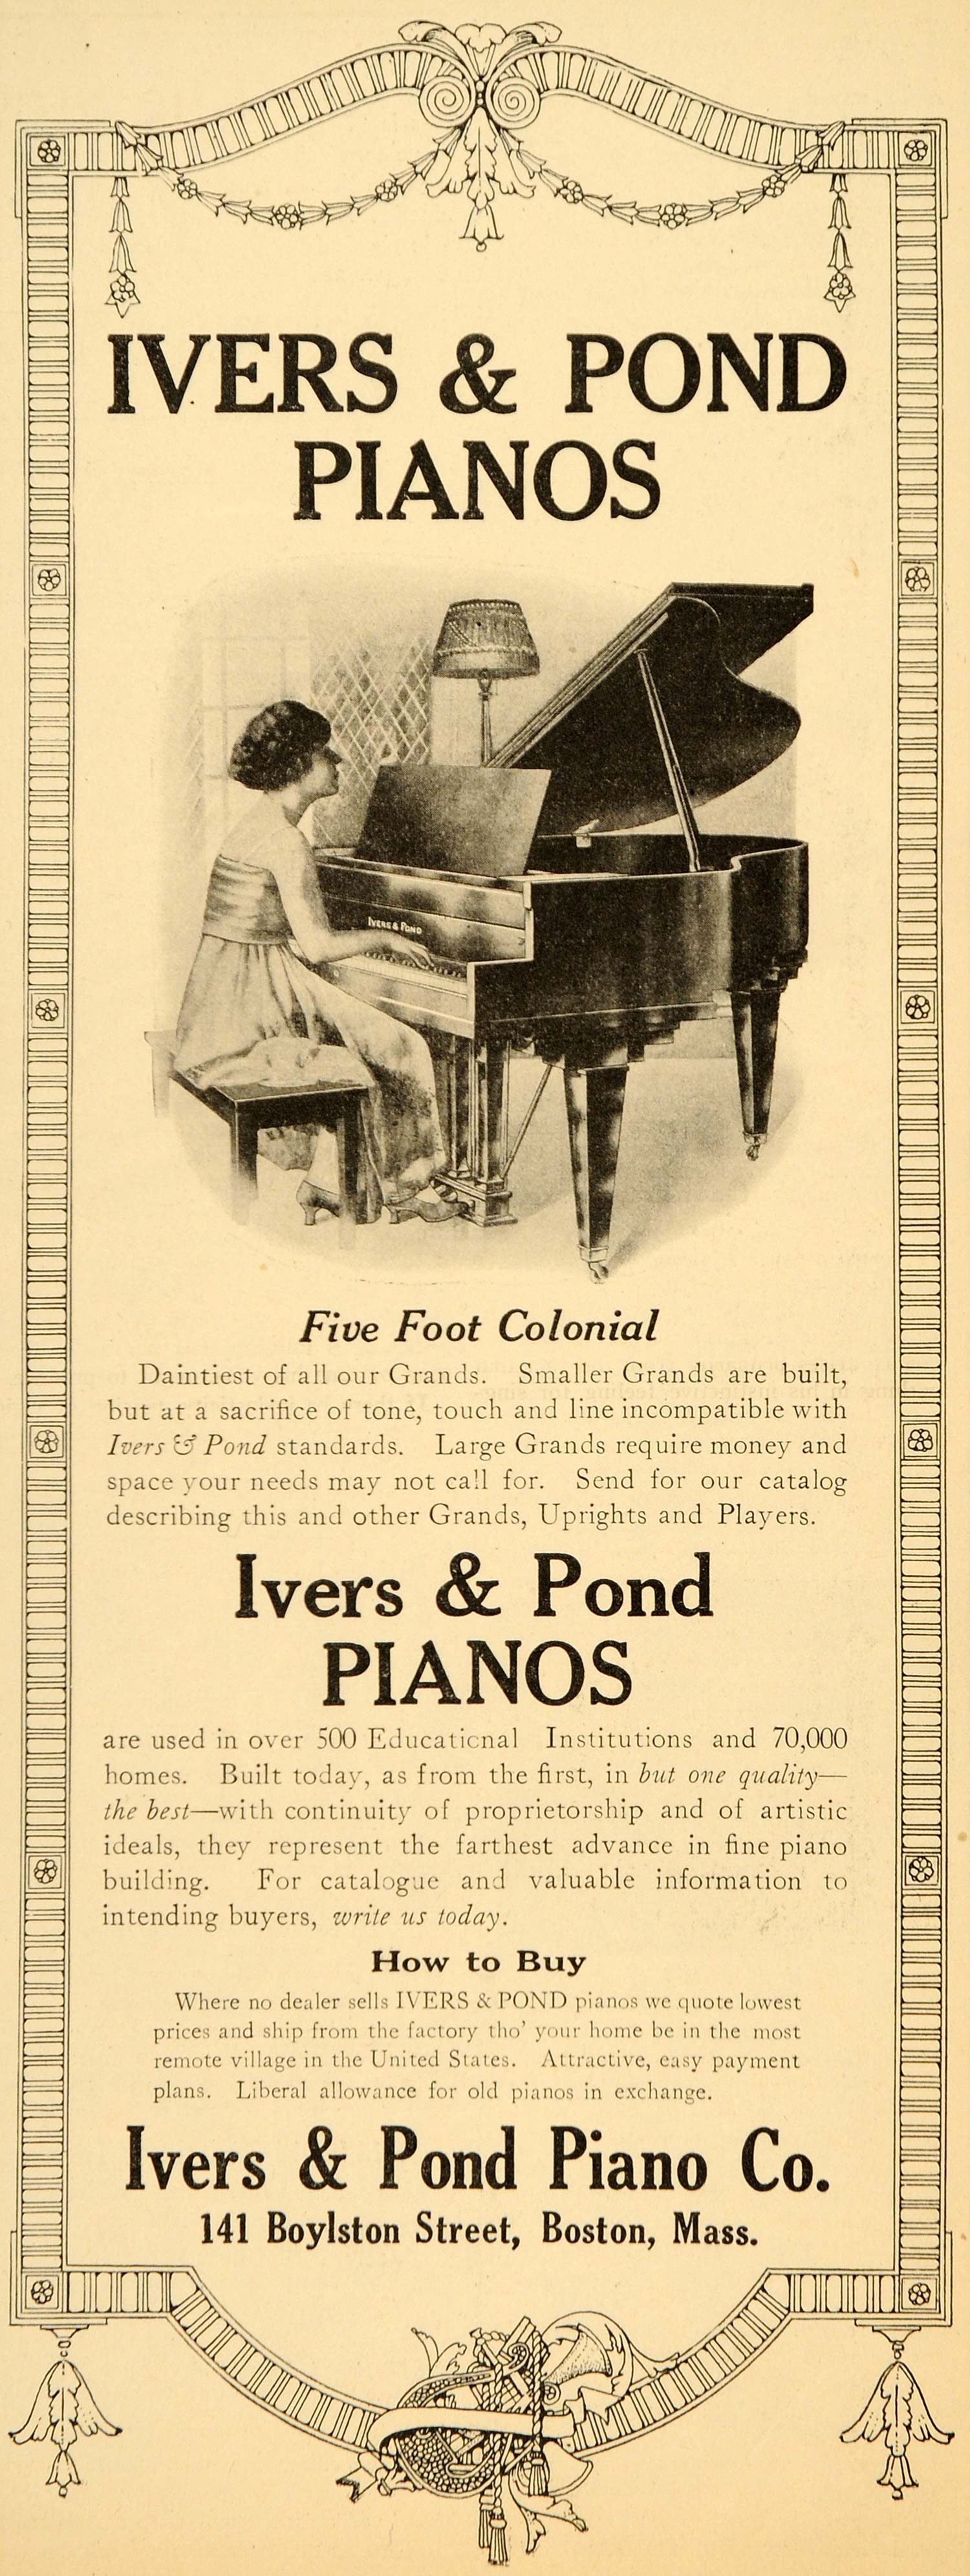 1925 Ad Ivers Pond Pianos Colonial Boylston St Boston - ORIGINAL ADVERTISING ET1